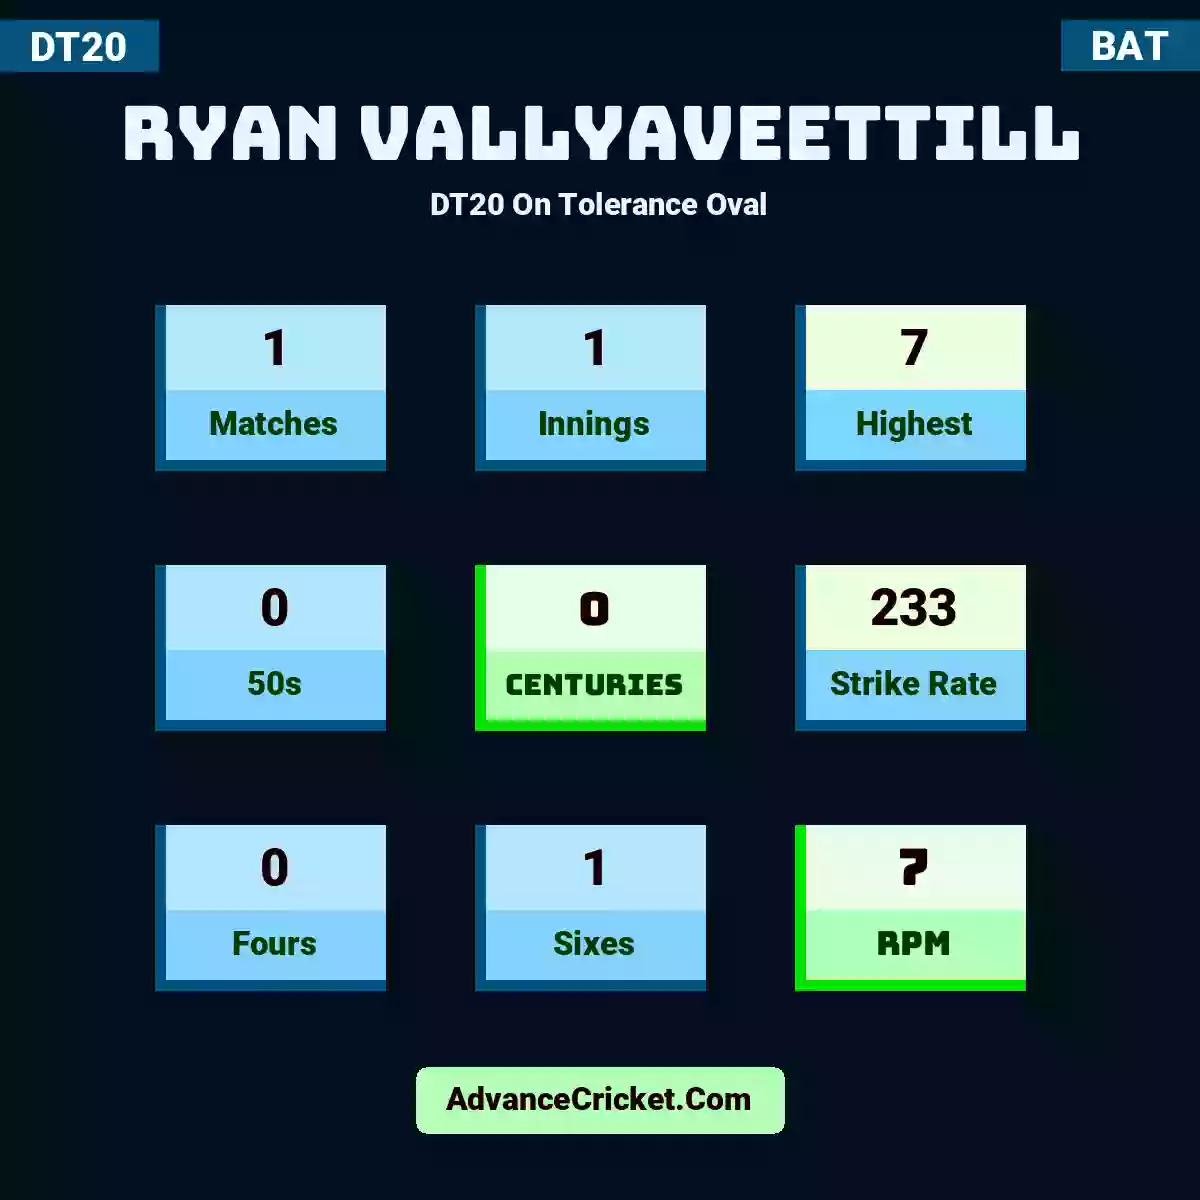 Ryan Vallyaveettill DT20  On Tolerance Oval, Ryan Vallyaveettill played 1 matches, scored 7 runs as highest, 0 half-centuries, and 0 centuries, with a strike rate of 233. R.Vallyaveettill hit 0 fours and 1 sixes, with an RPM of 7.